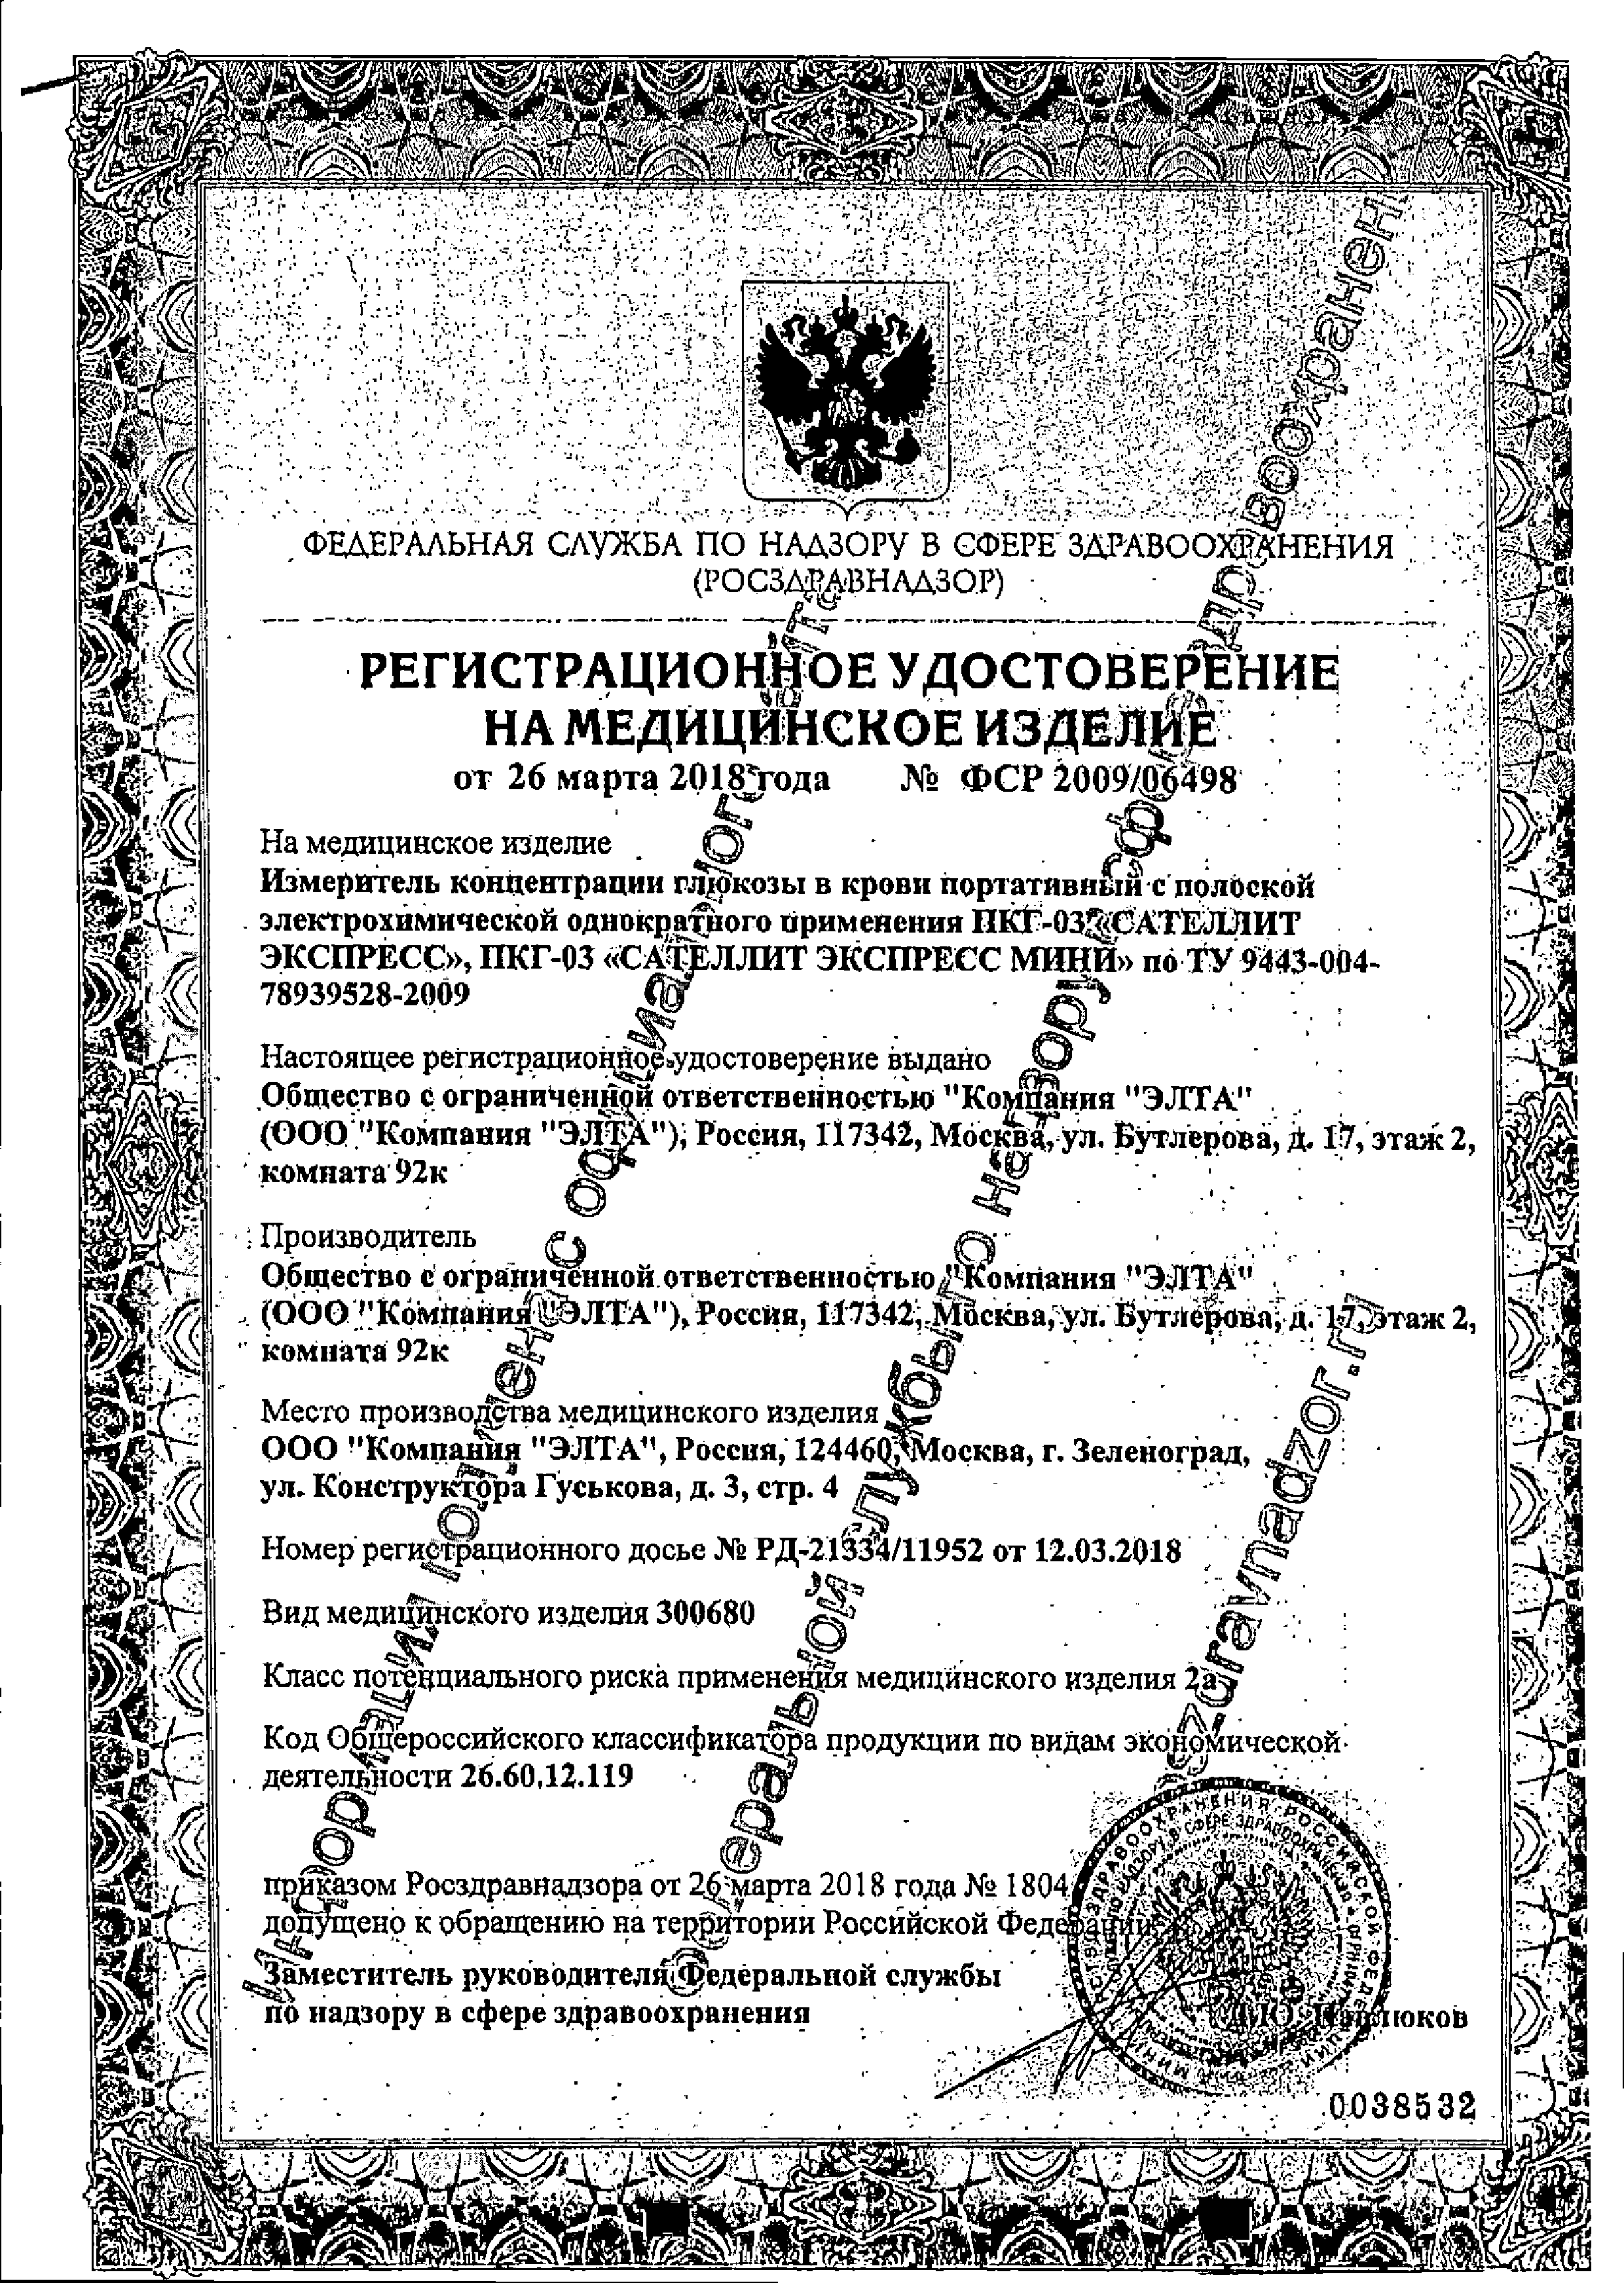 Глюкометр Сателлит Экспресс ПКГ-03 сертификат